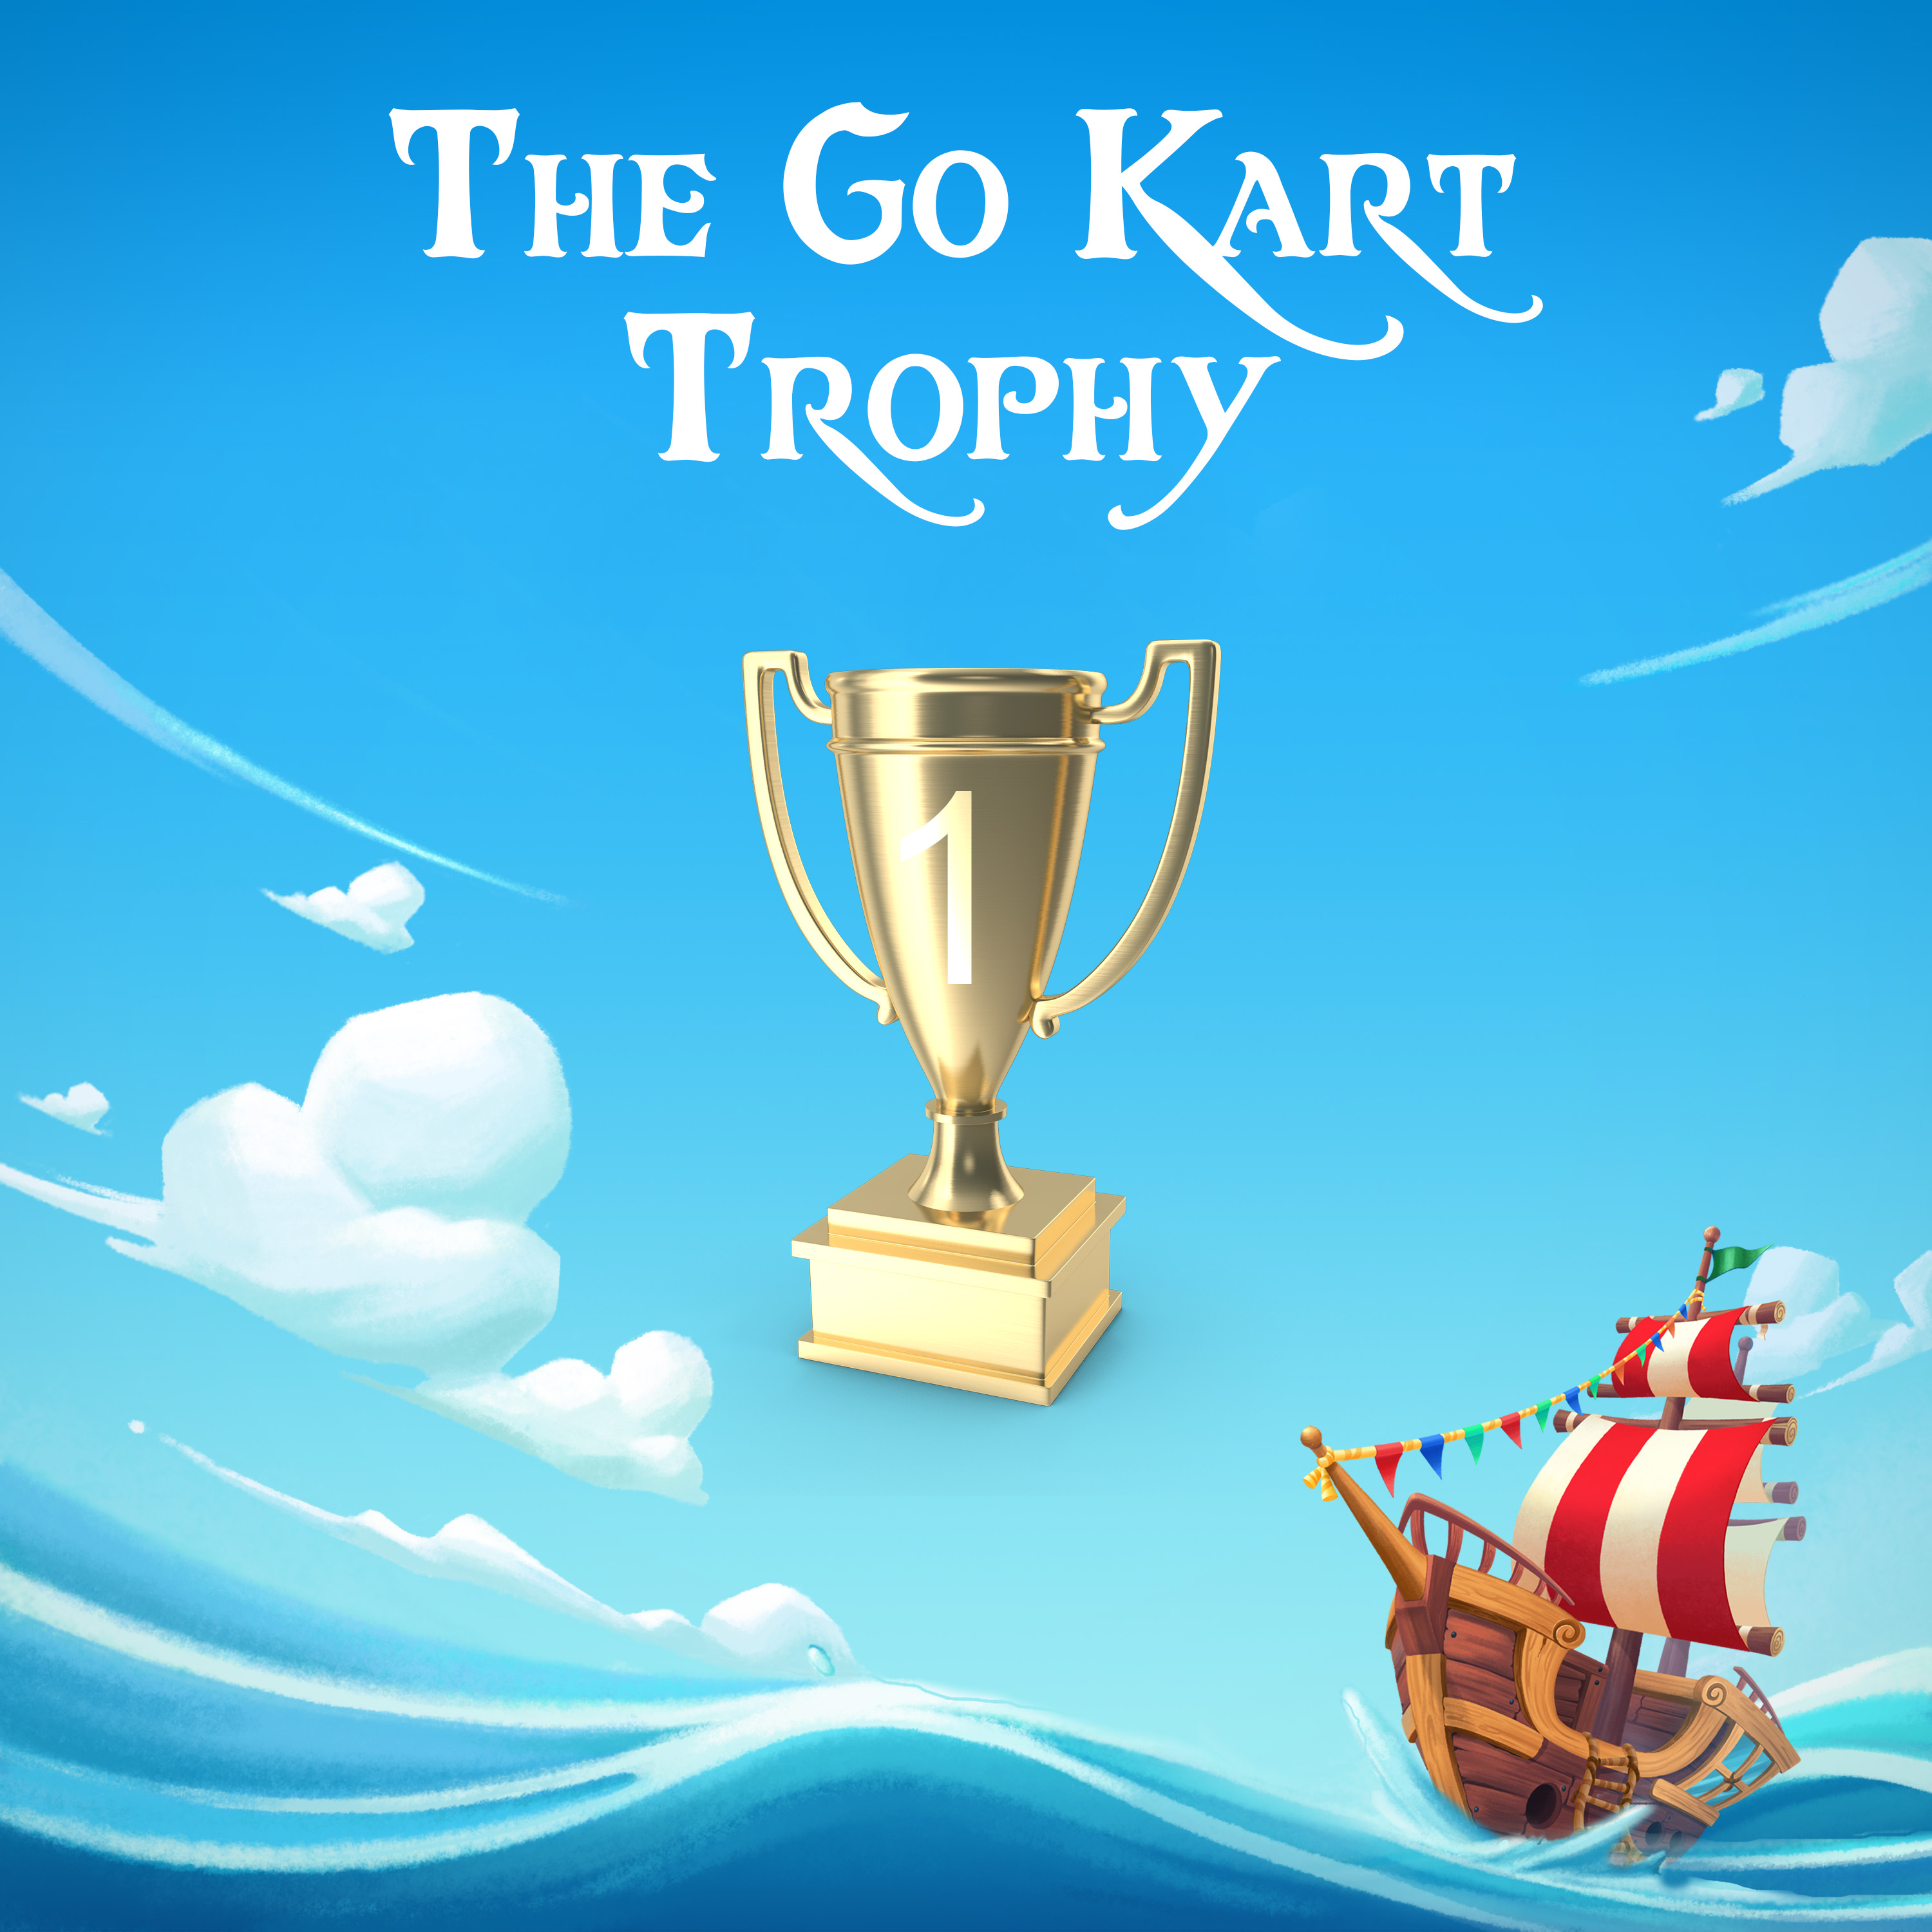 The Go Kart Trophy